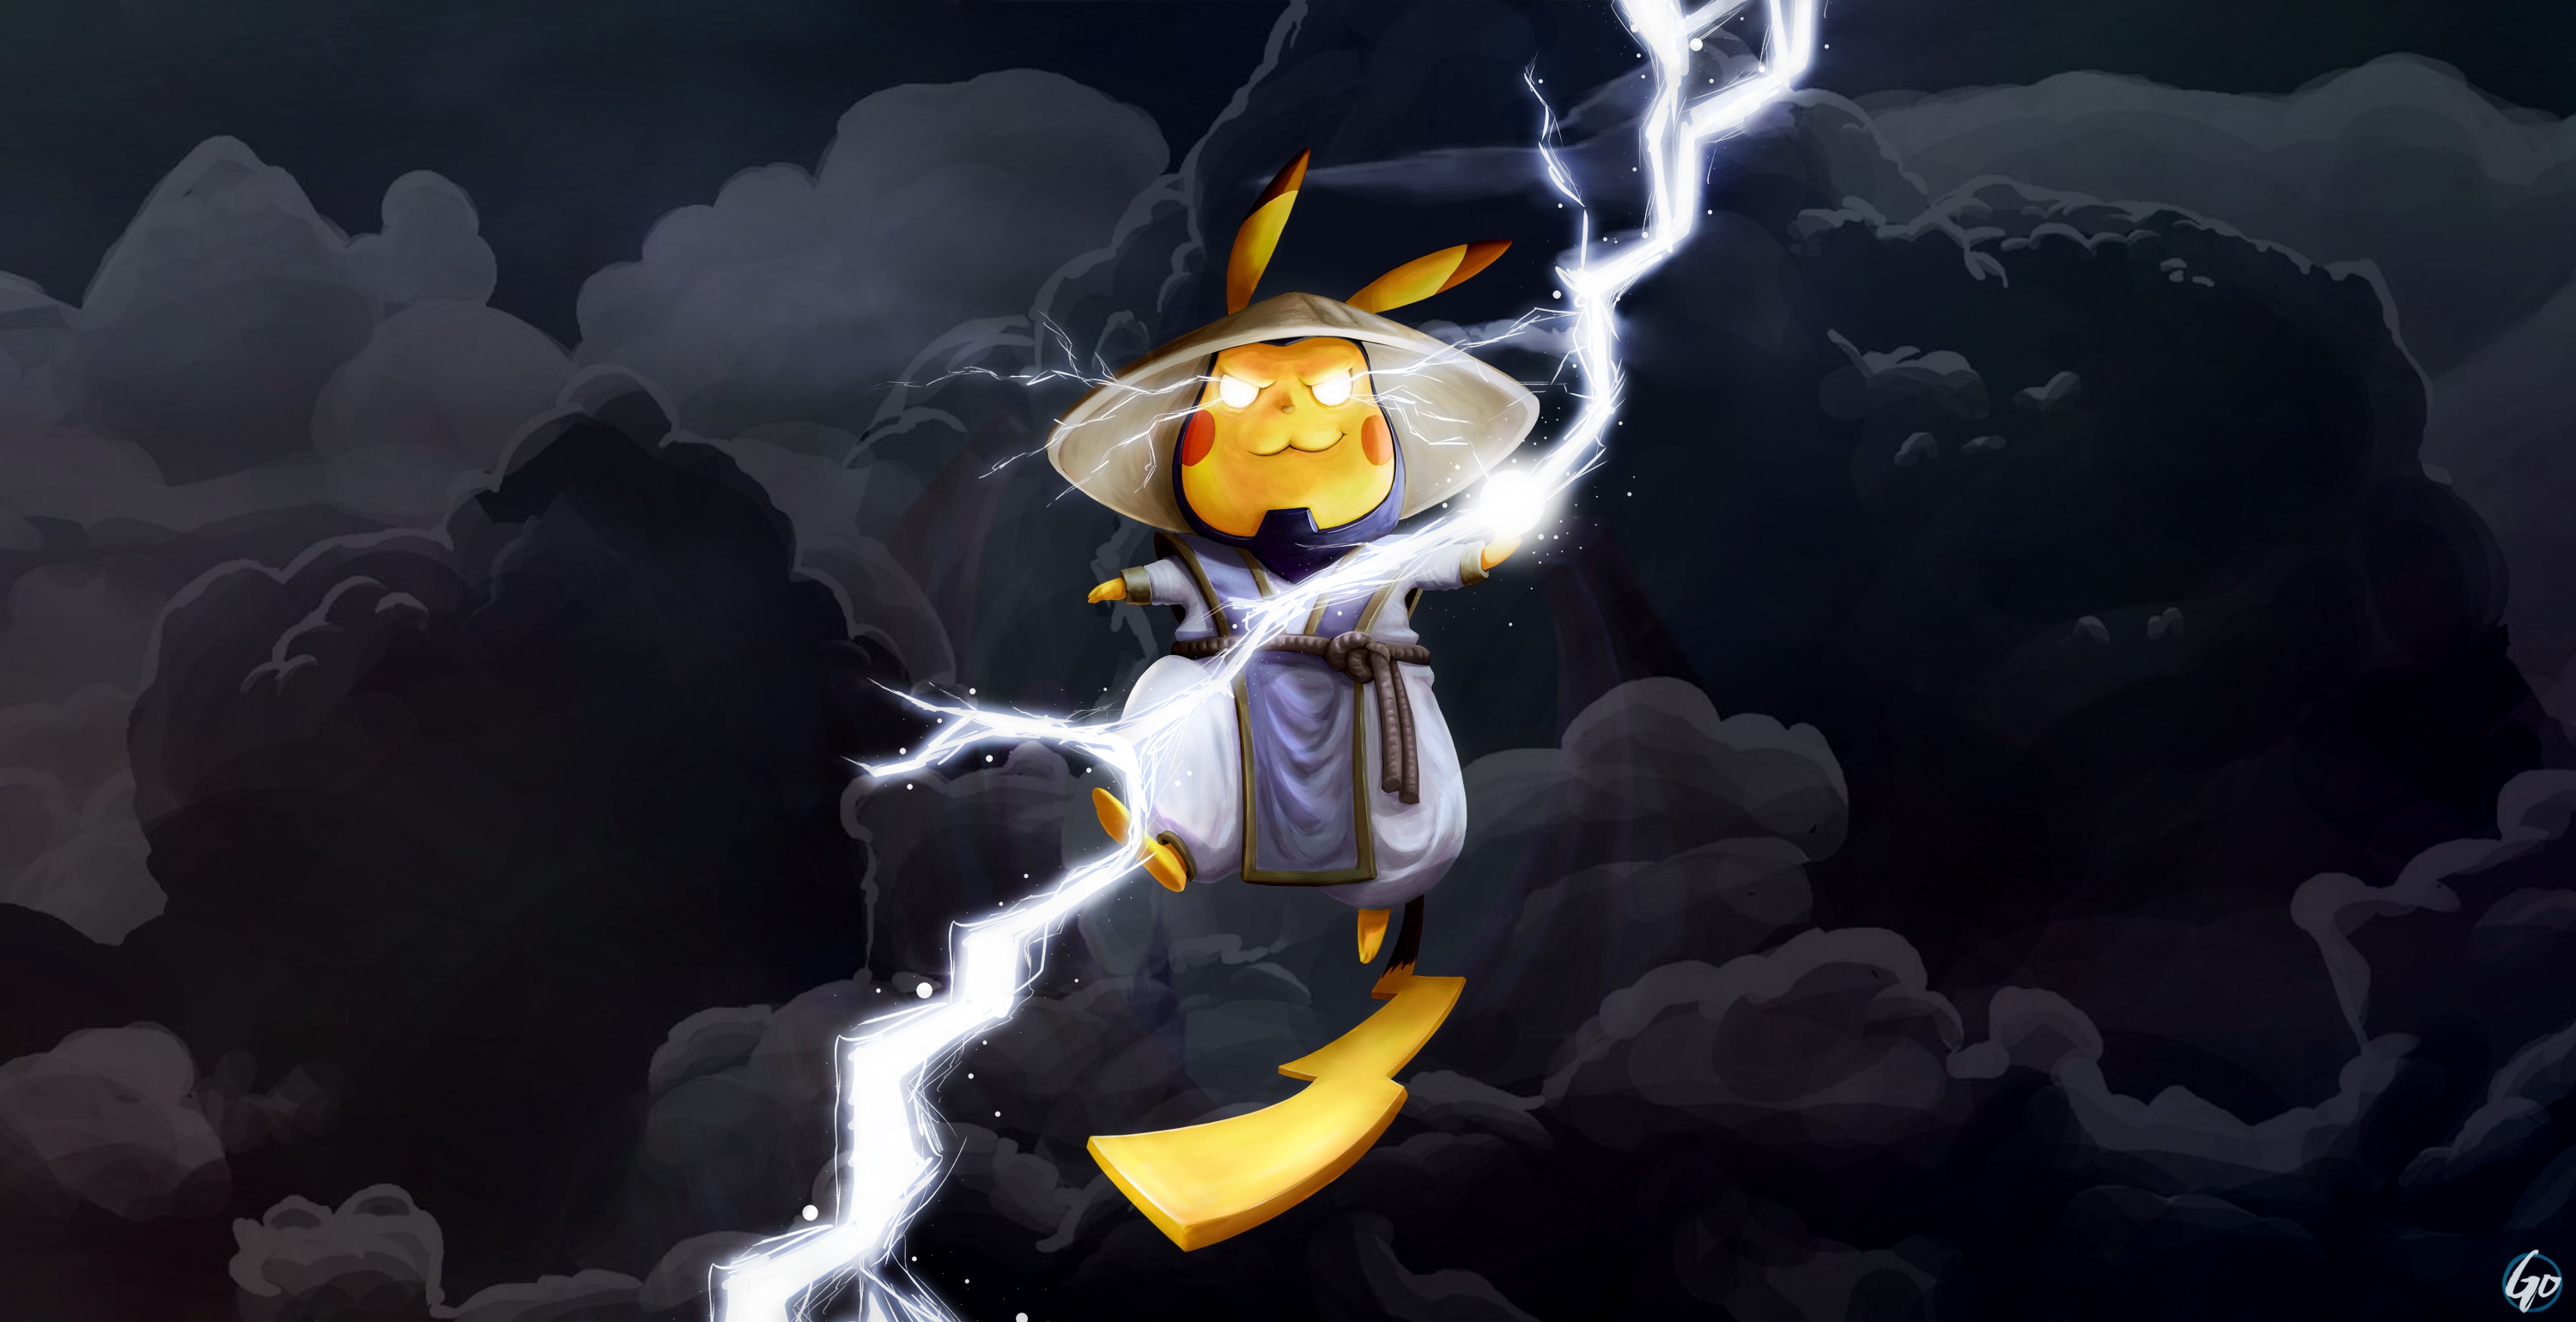 raiden (mortal kombat), pikachu, video game, crossover, cloud, lightning, mortal kombat, pokémon